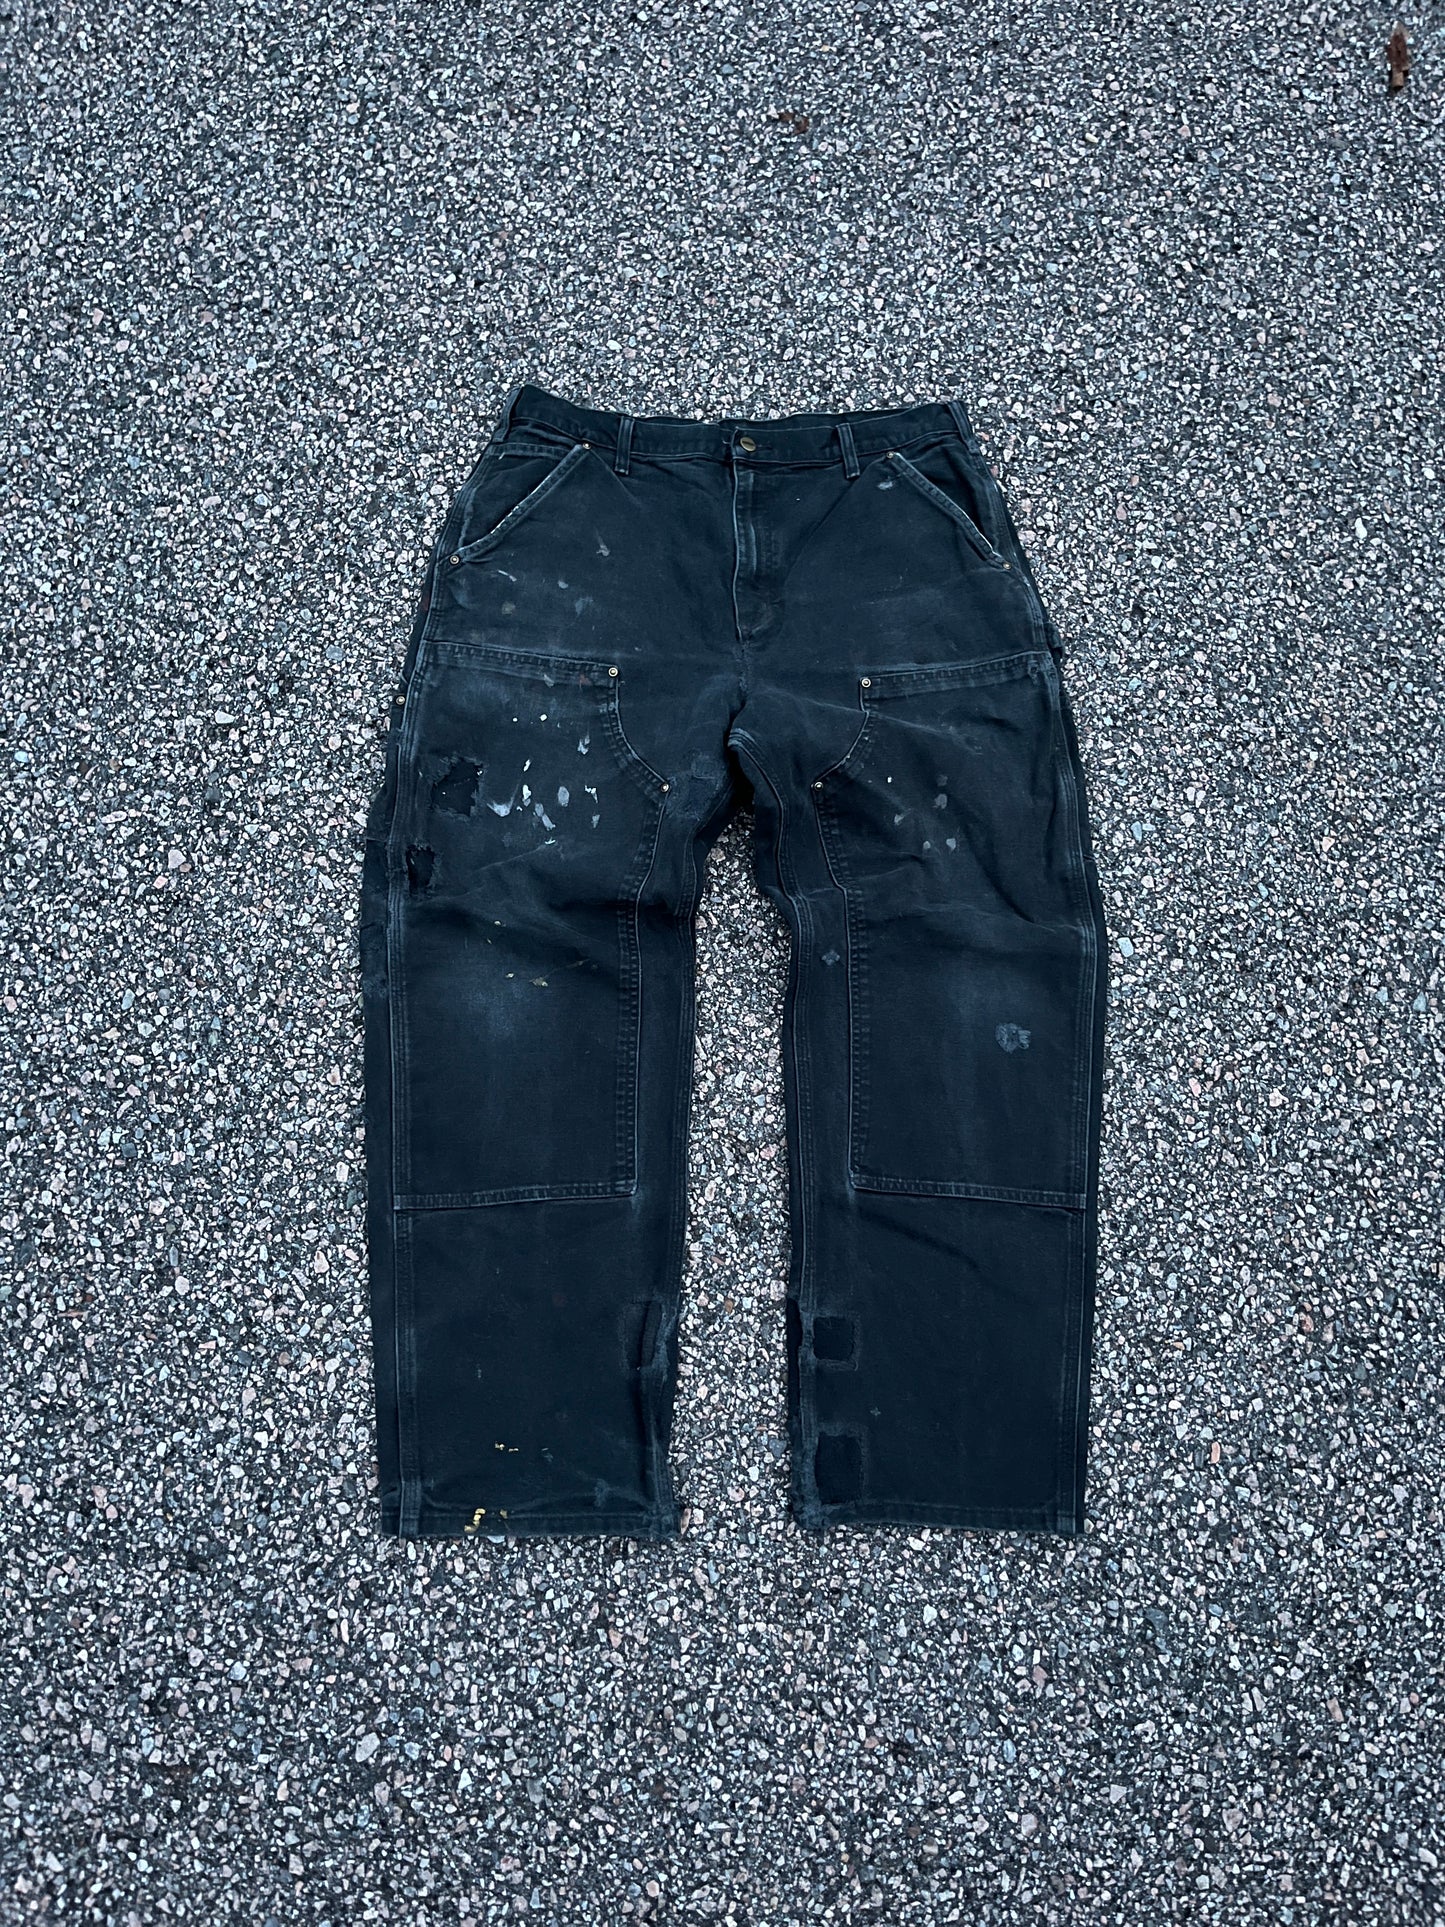 Faded Black Carhartt Double Knee Pants - 35 x 30